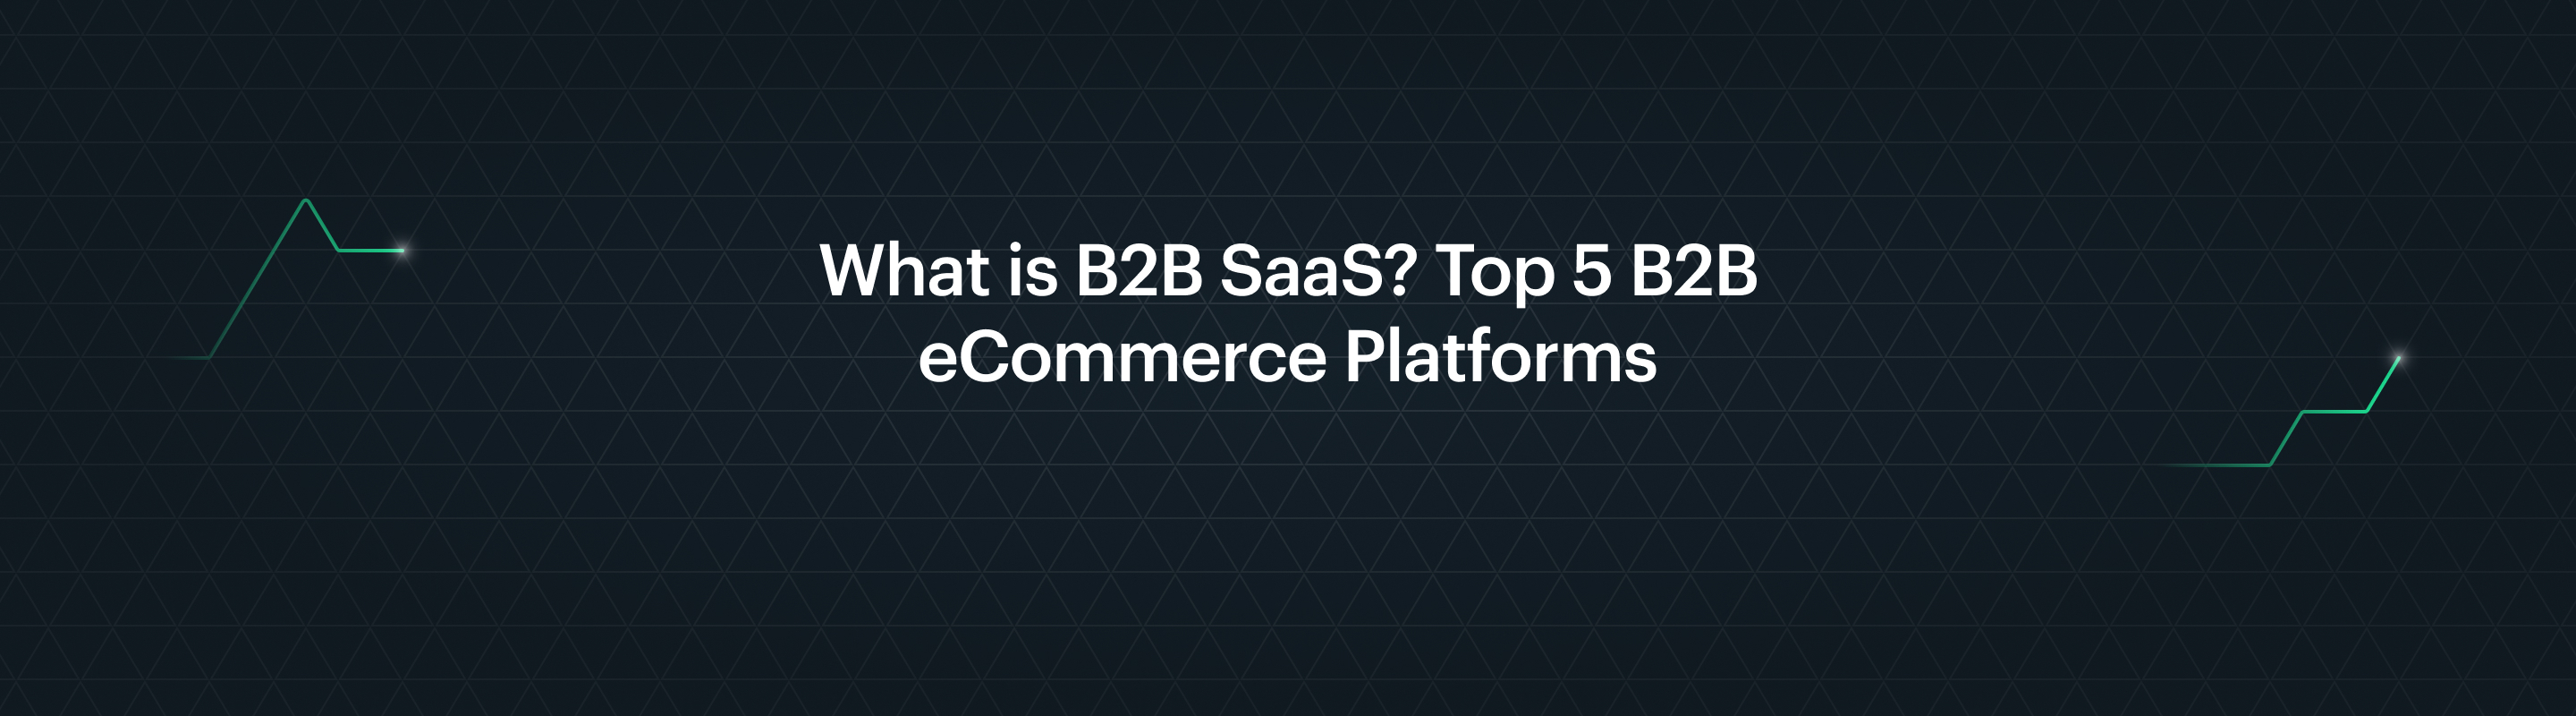 Top 5 B2B e-commerce platforms